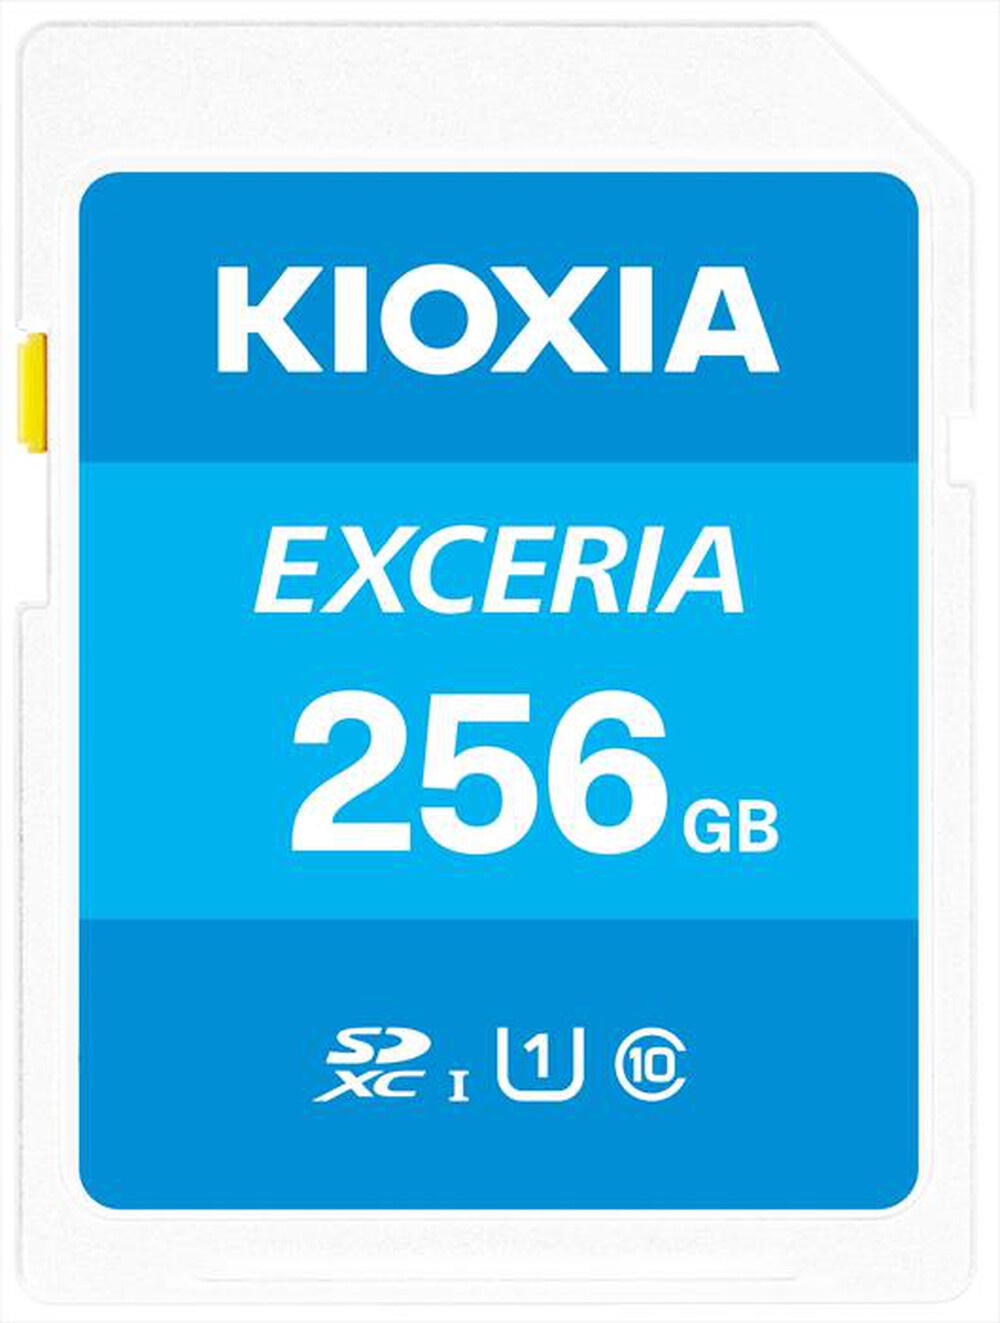 "KIOXIA - SD EXCERIA NEX1 UHS-1 256GB-Azzurro"